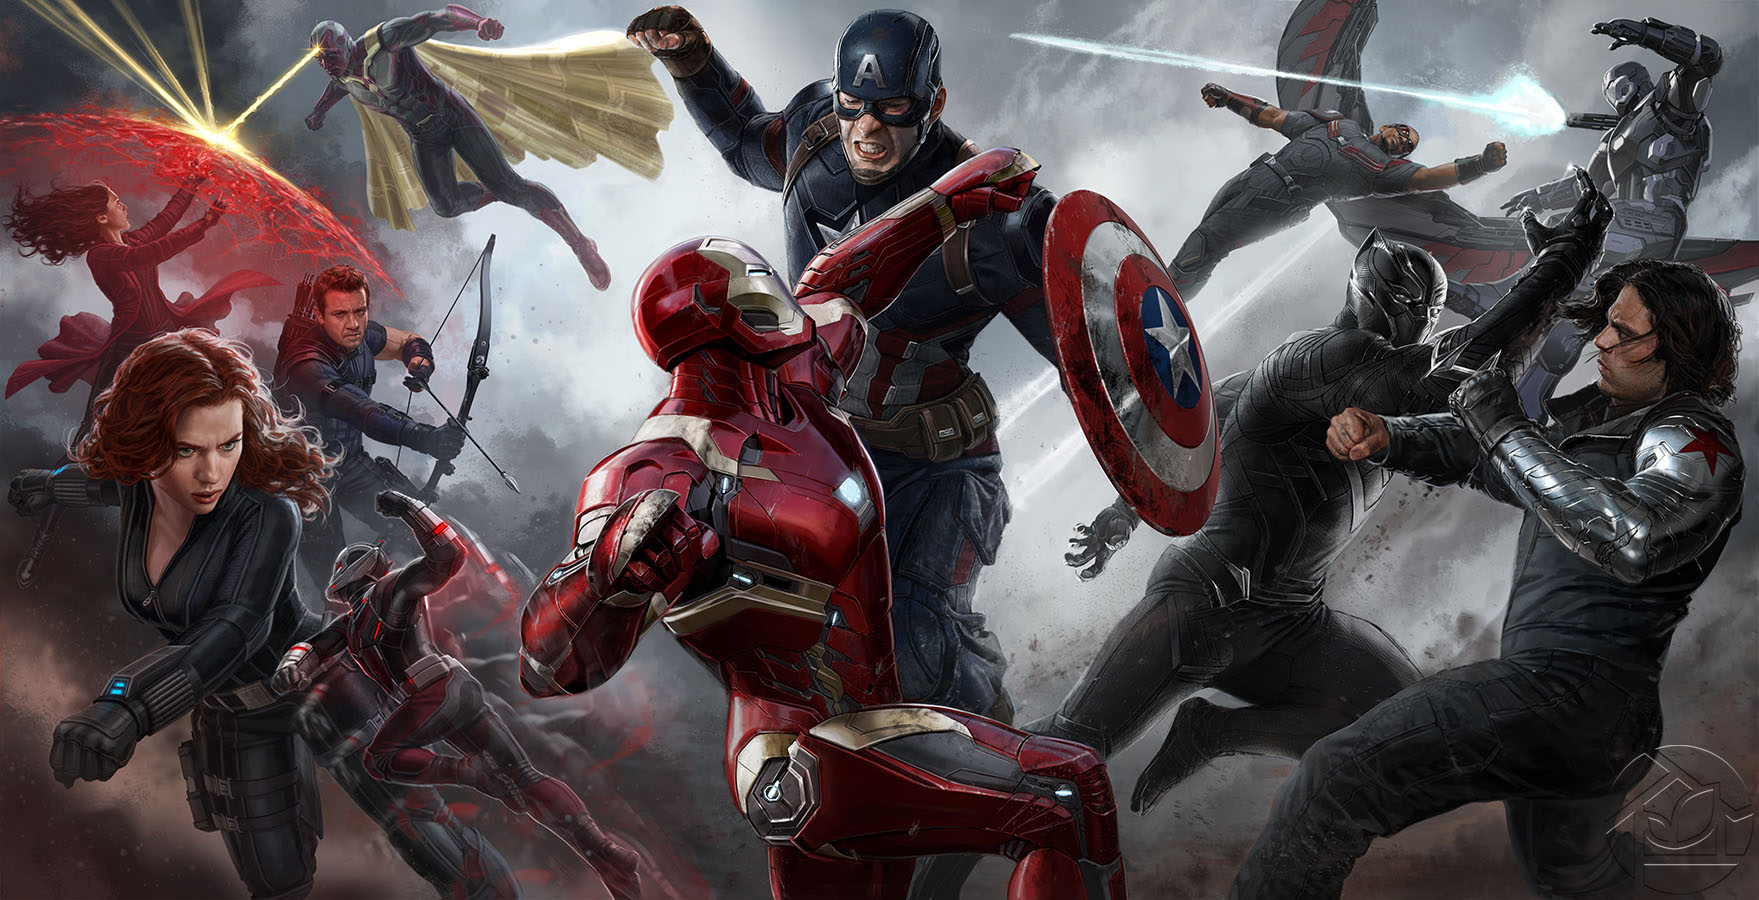 Фотообои "Сражение Капитана Америка и Железного Человека" - Арт. 020000019